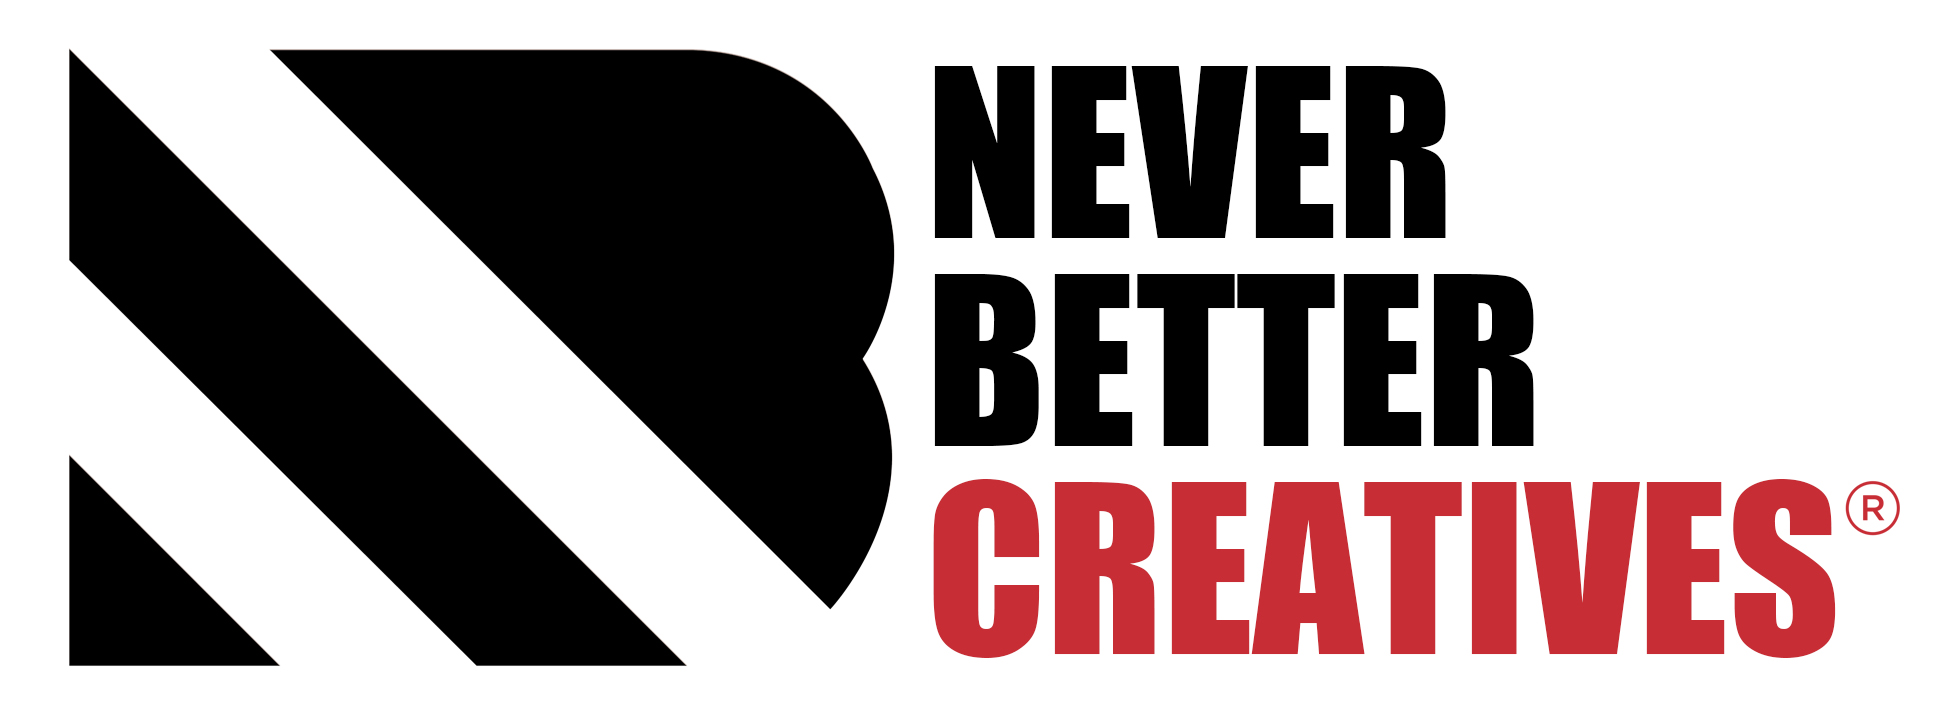 NEVER BETTER CREATIVES